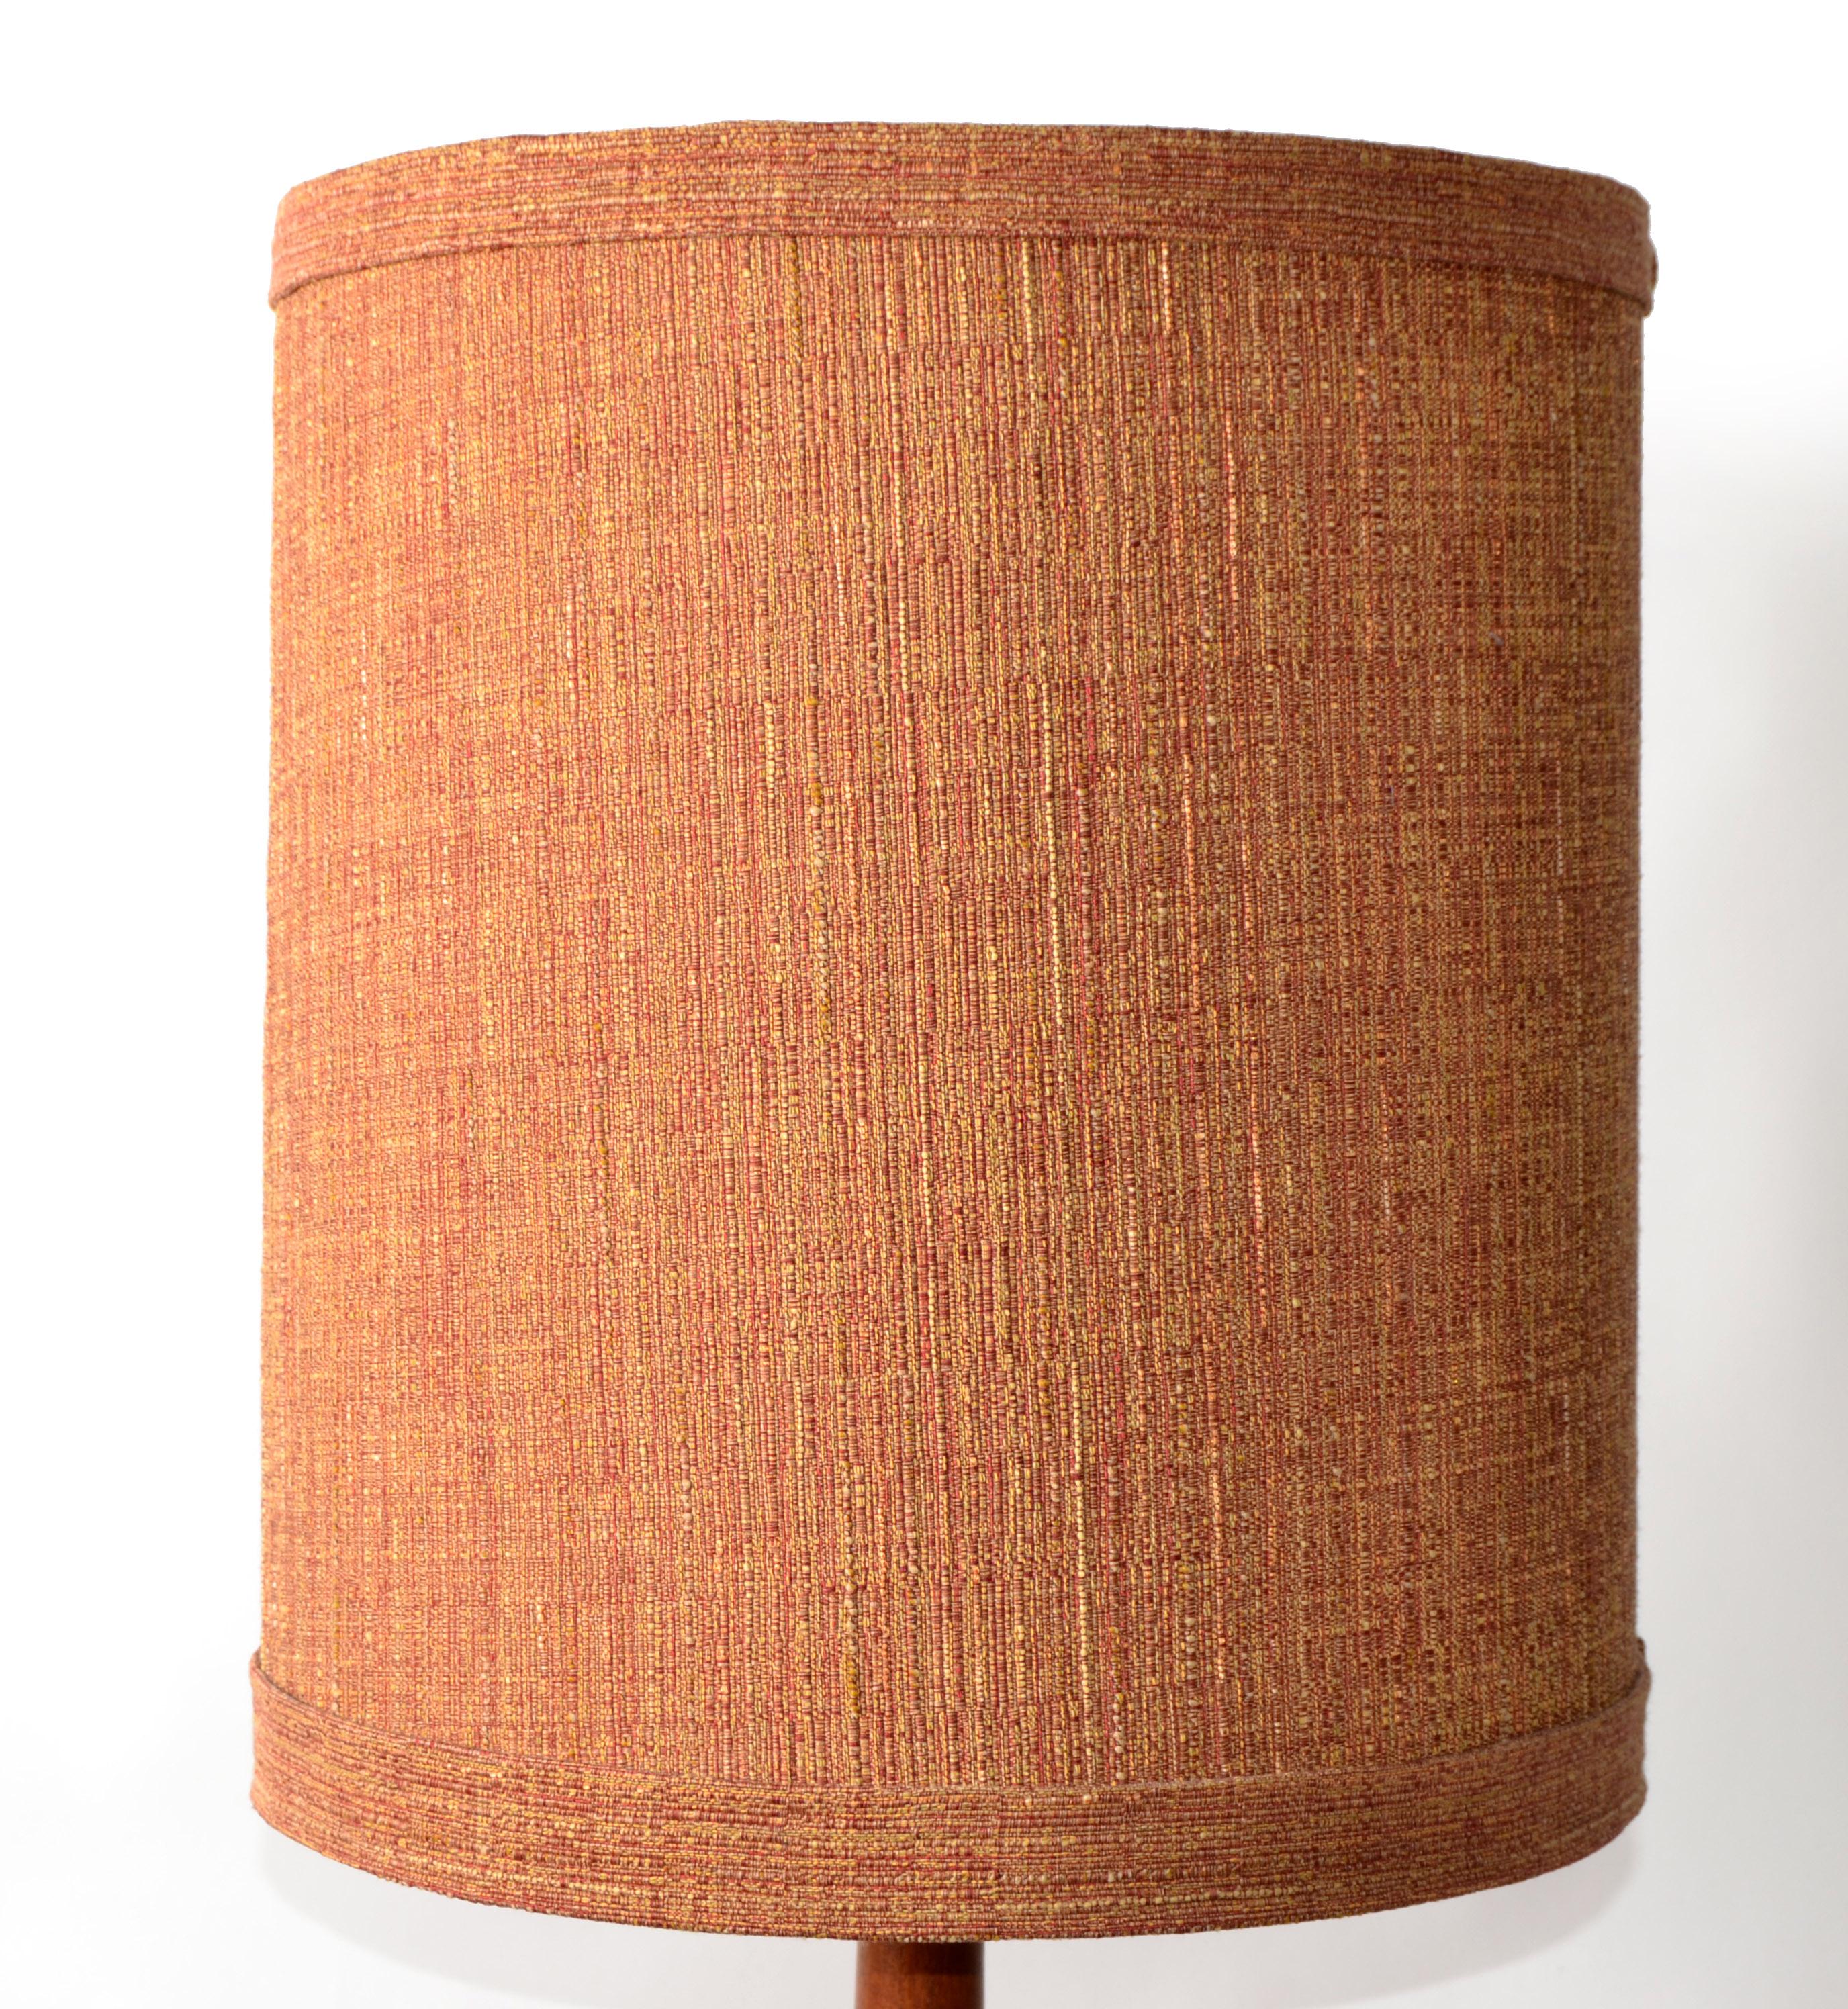 Nessen Lighting Style Turned Walnut Floor Lamp Mid-Century Modern Fabric Shade For Sale 2